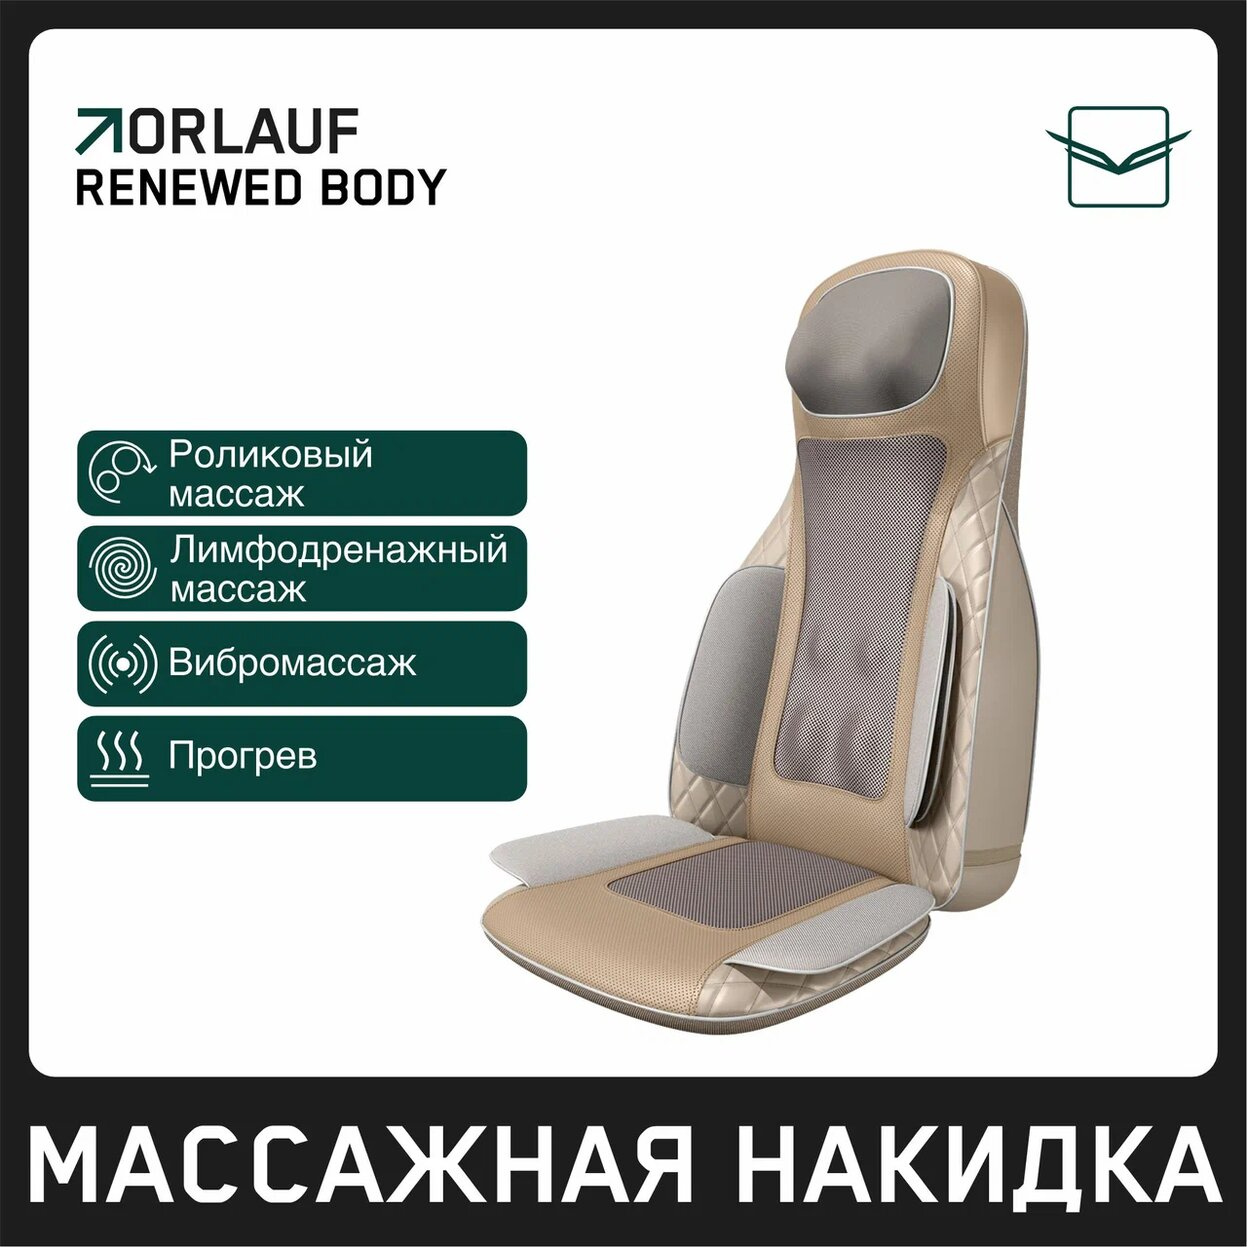 Orlauf Renewed Body из каталога устройств для массажа в Волгограде по цене 39900 ₽